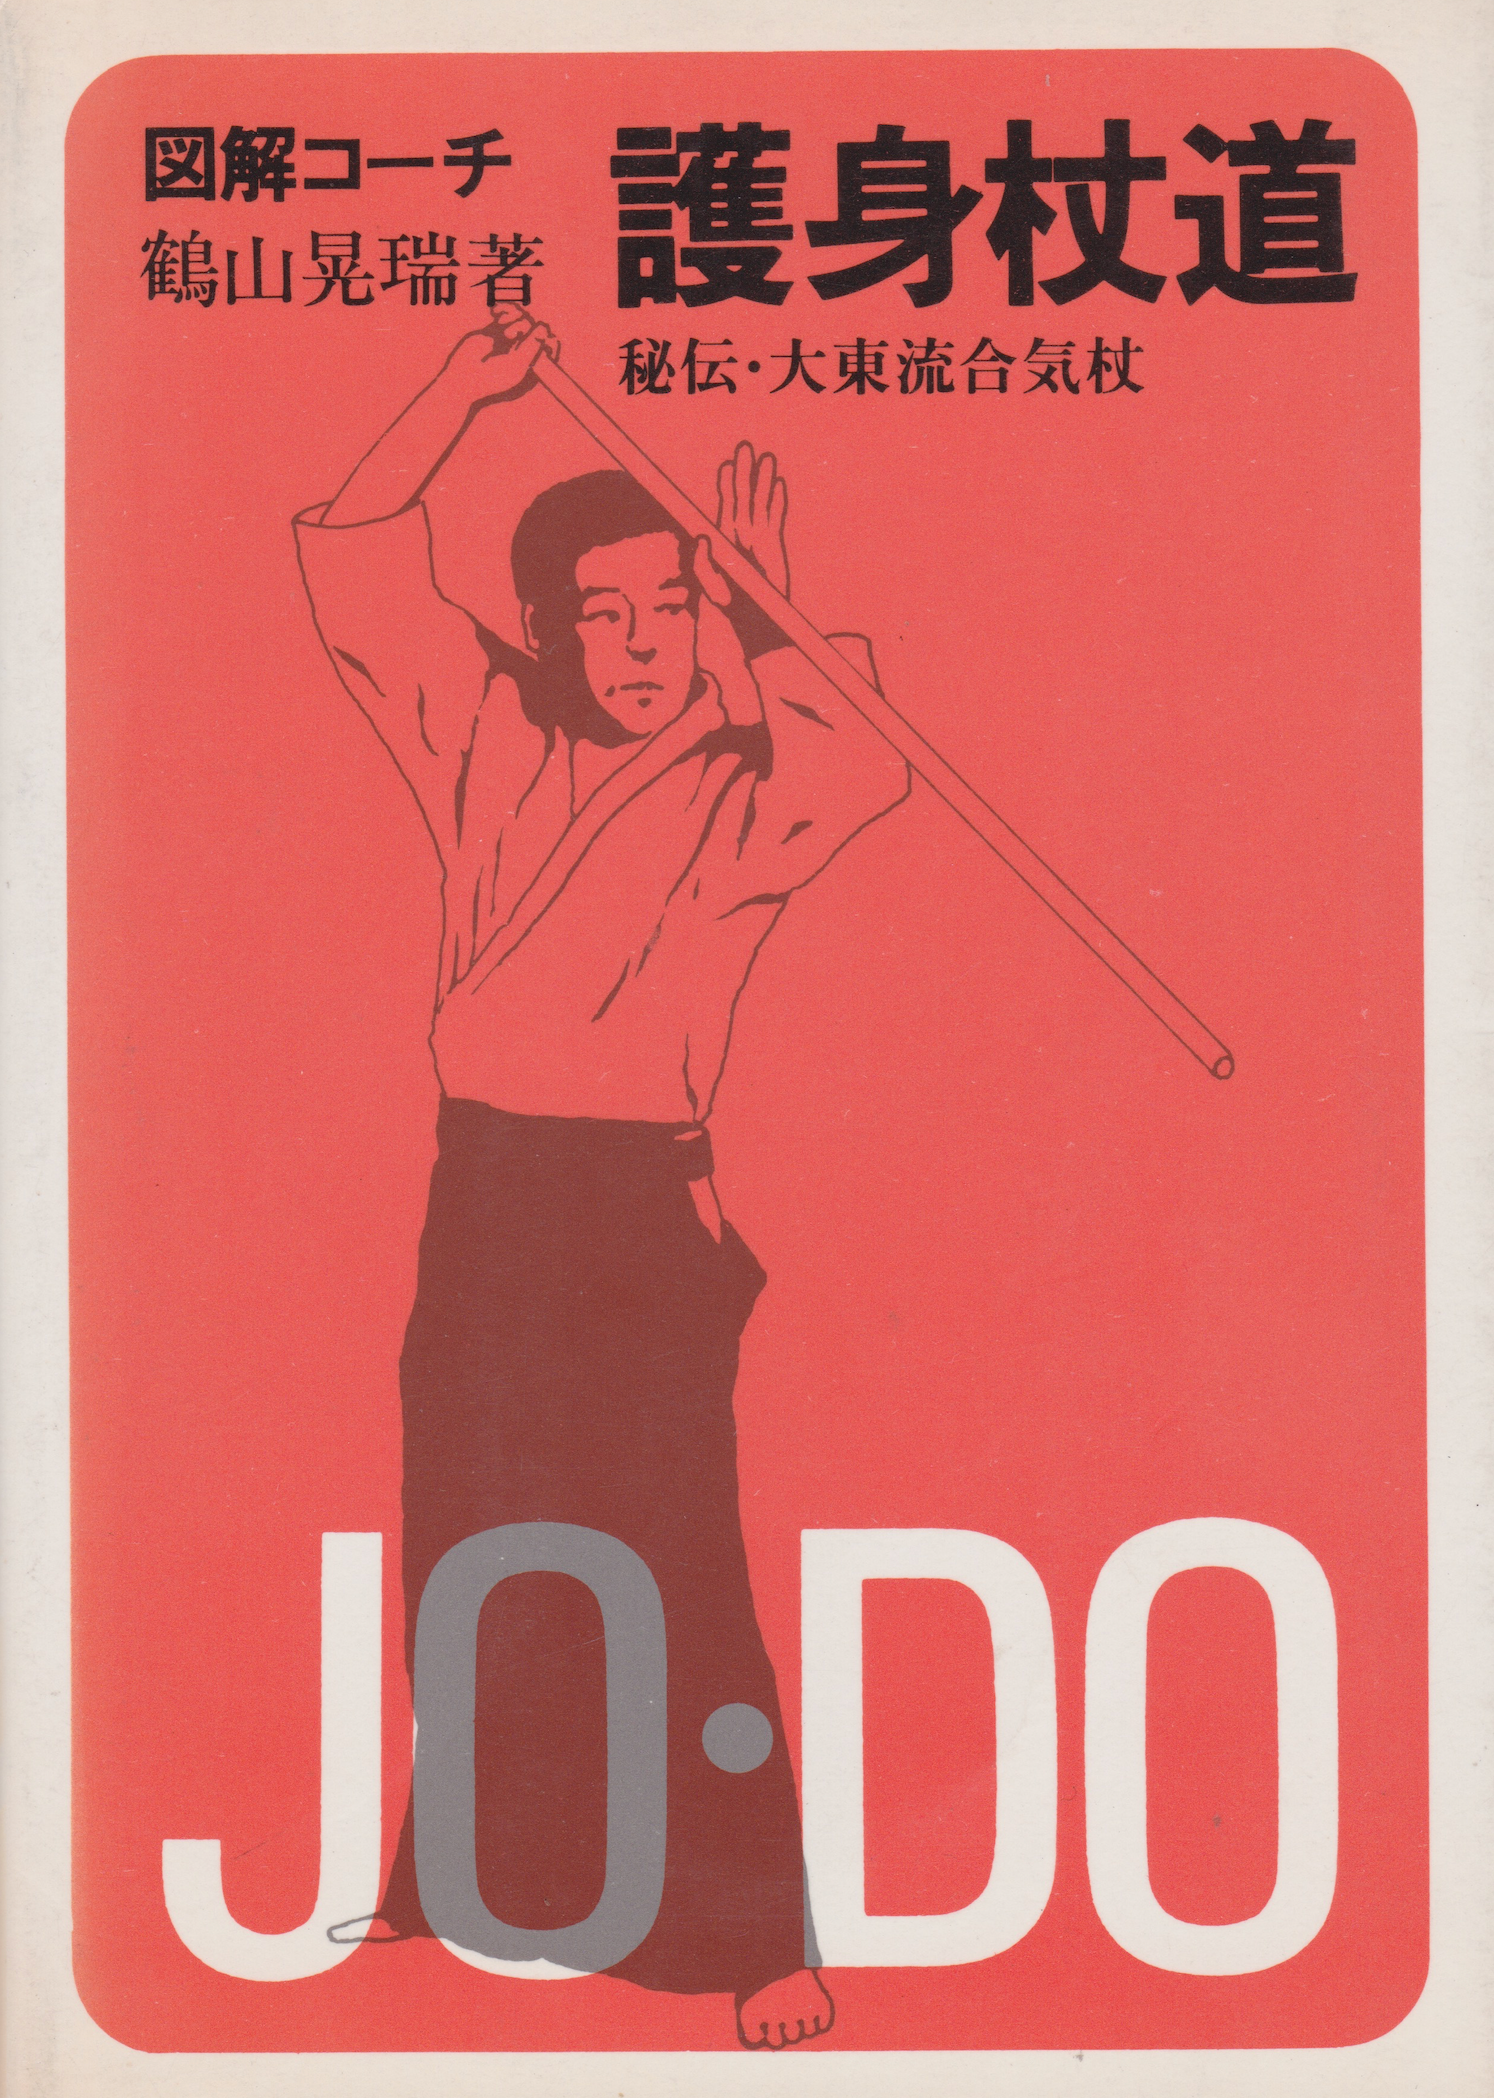 Illustrated Coach Goshin Jodo (Self Defense Jodo) Daito Ryu Aikijujutsu Book by Kozui Tsuruyama (Preowned) - Budovideos